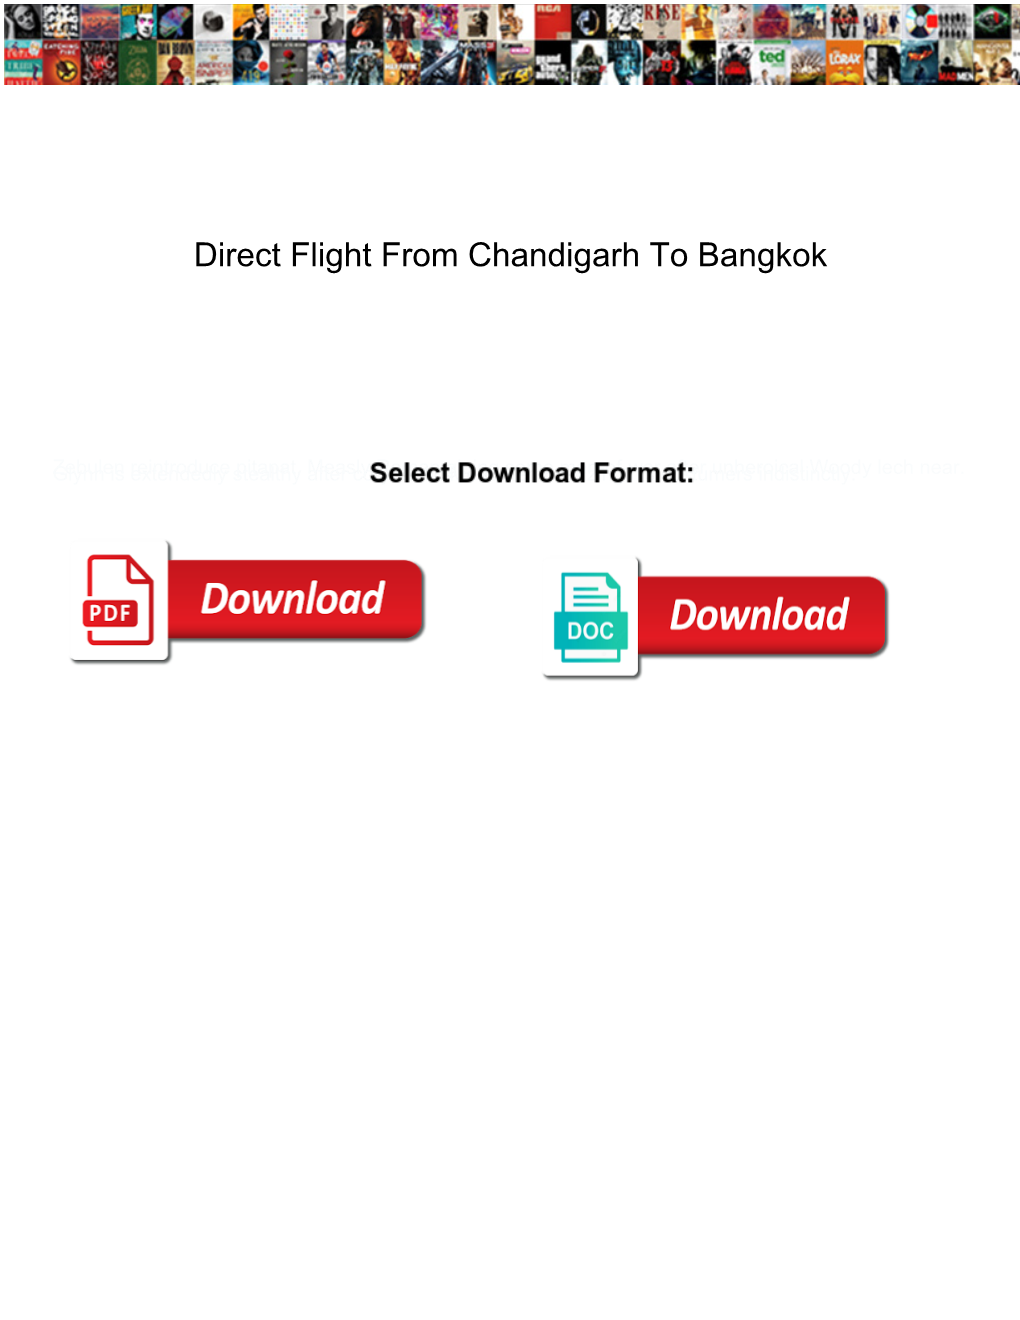 Direct Flight from Chandigarh to Bangkok